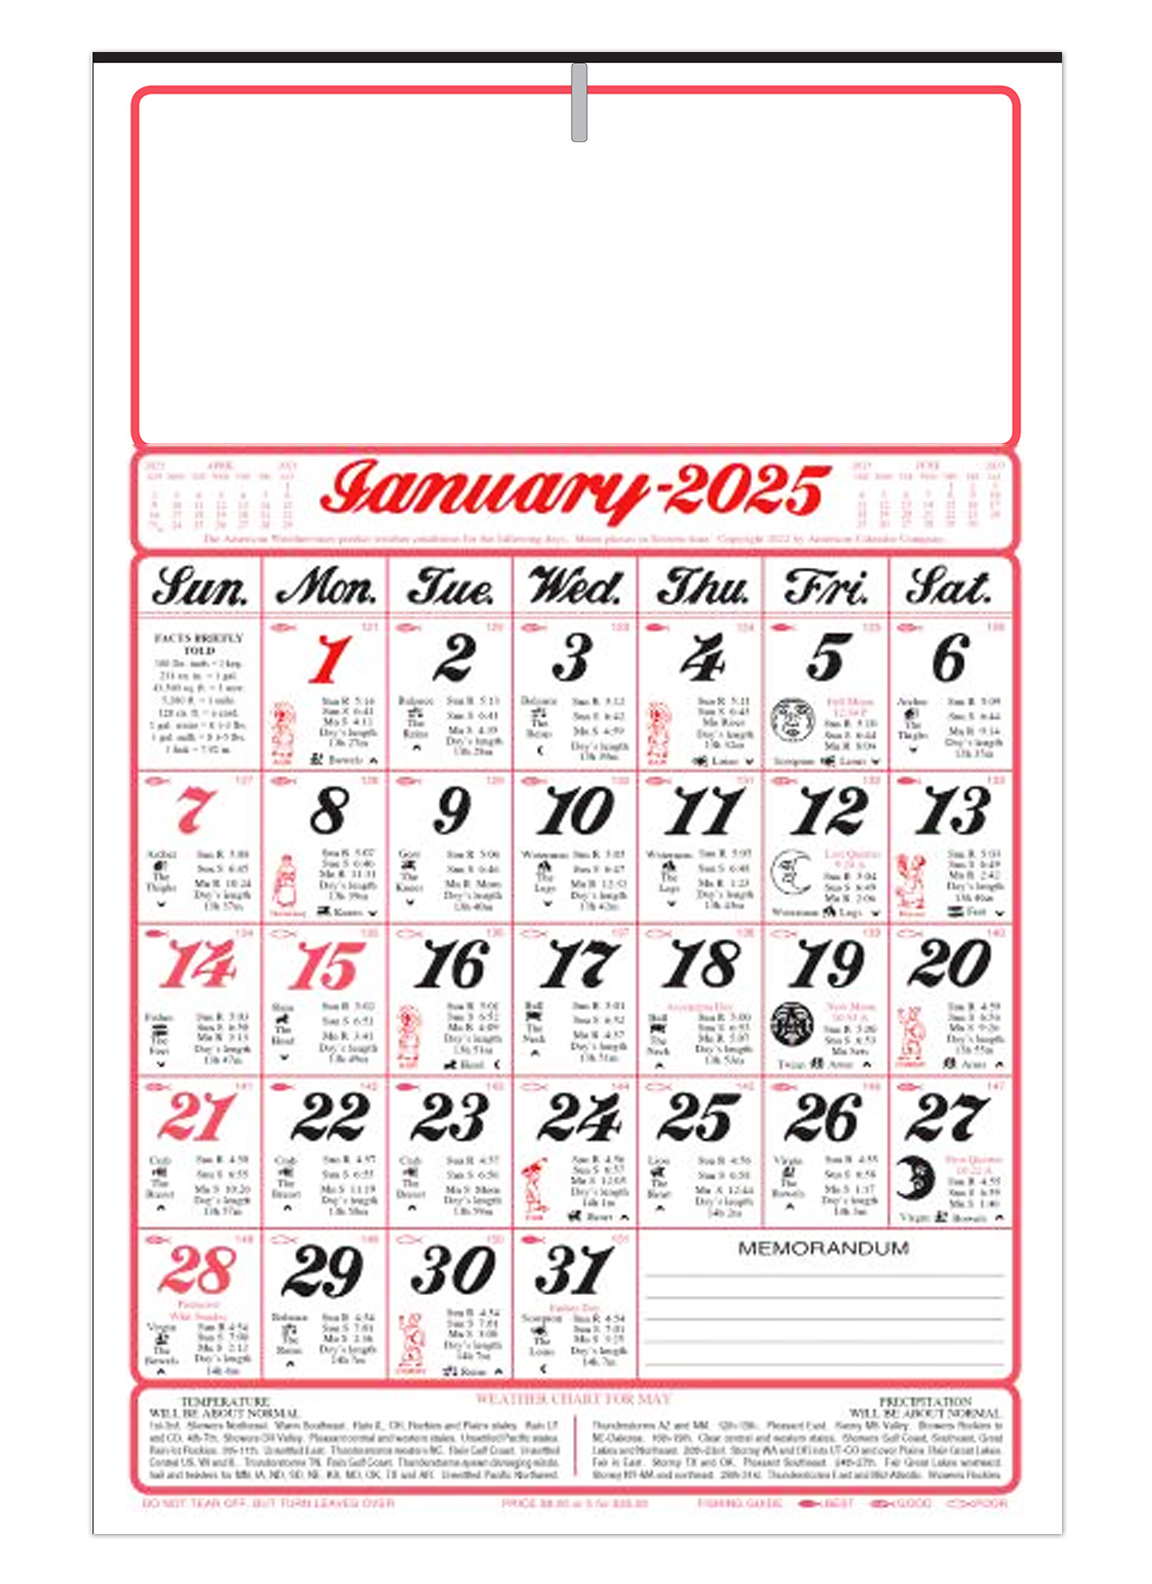 6 Sheet Monthly Almanac Calendar (11x17) ValueCalendars com